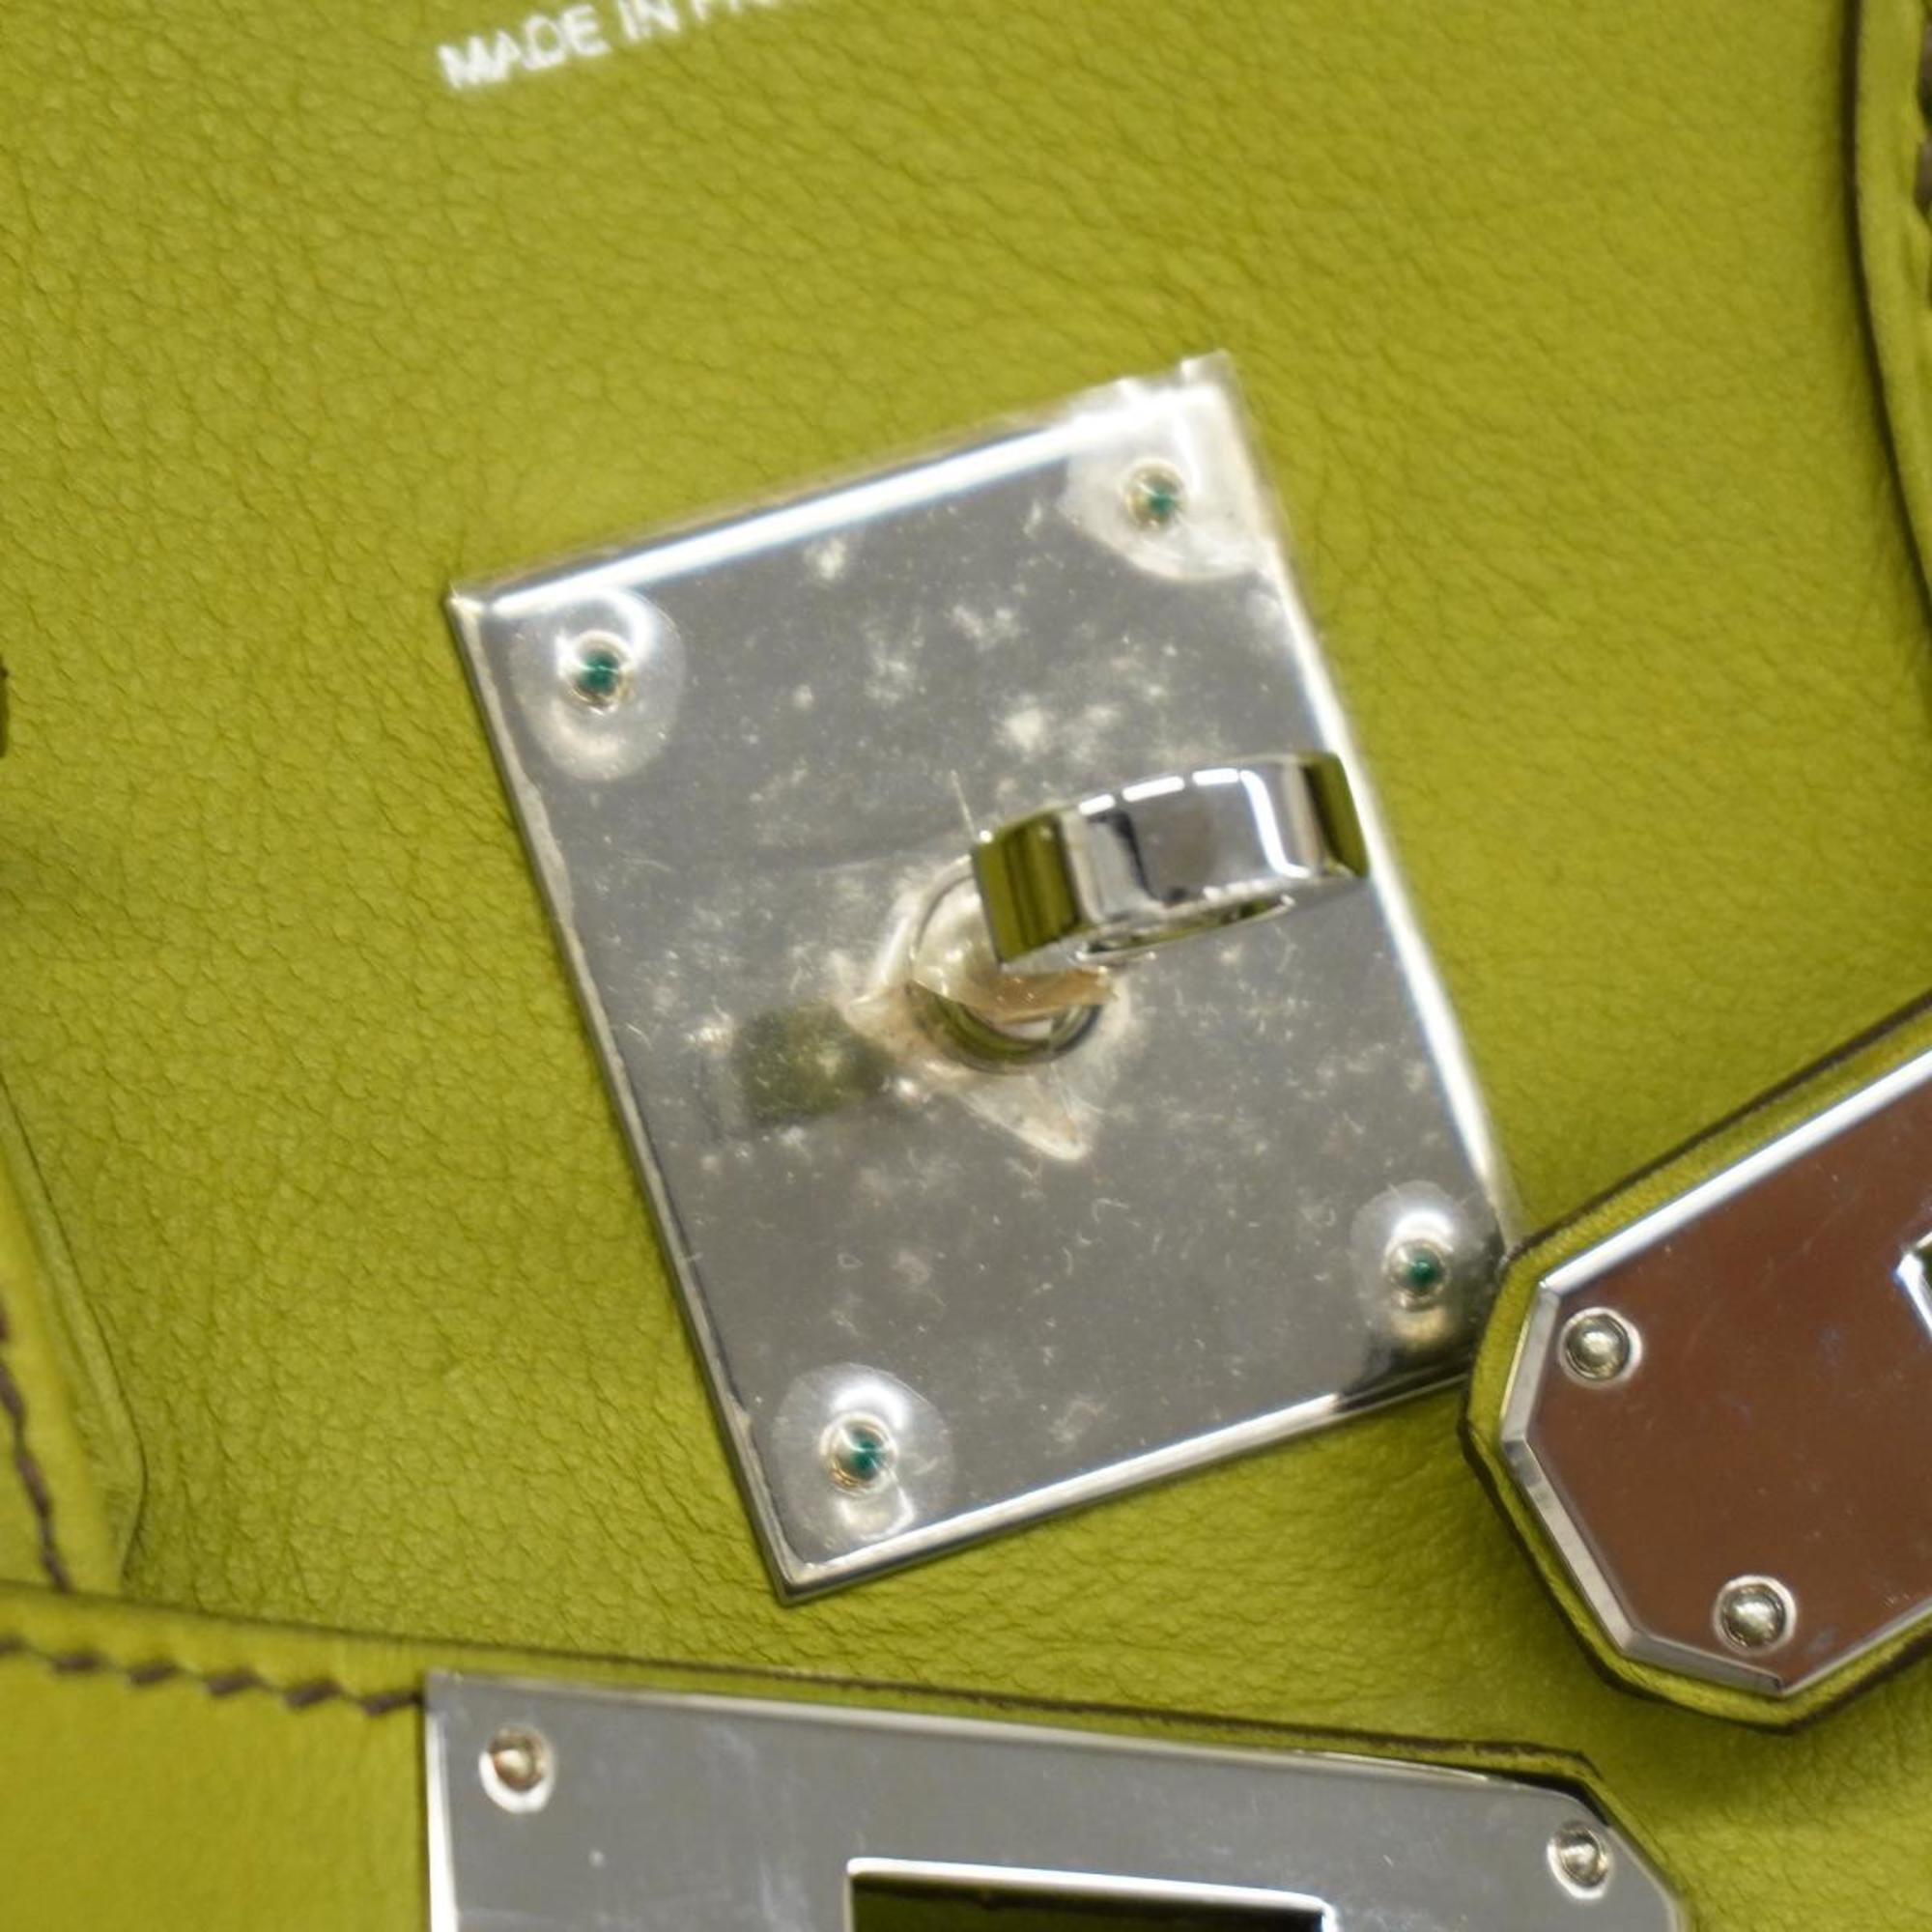 Hermes handbag Birkin 30 J stamp Swift anise green ladies